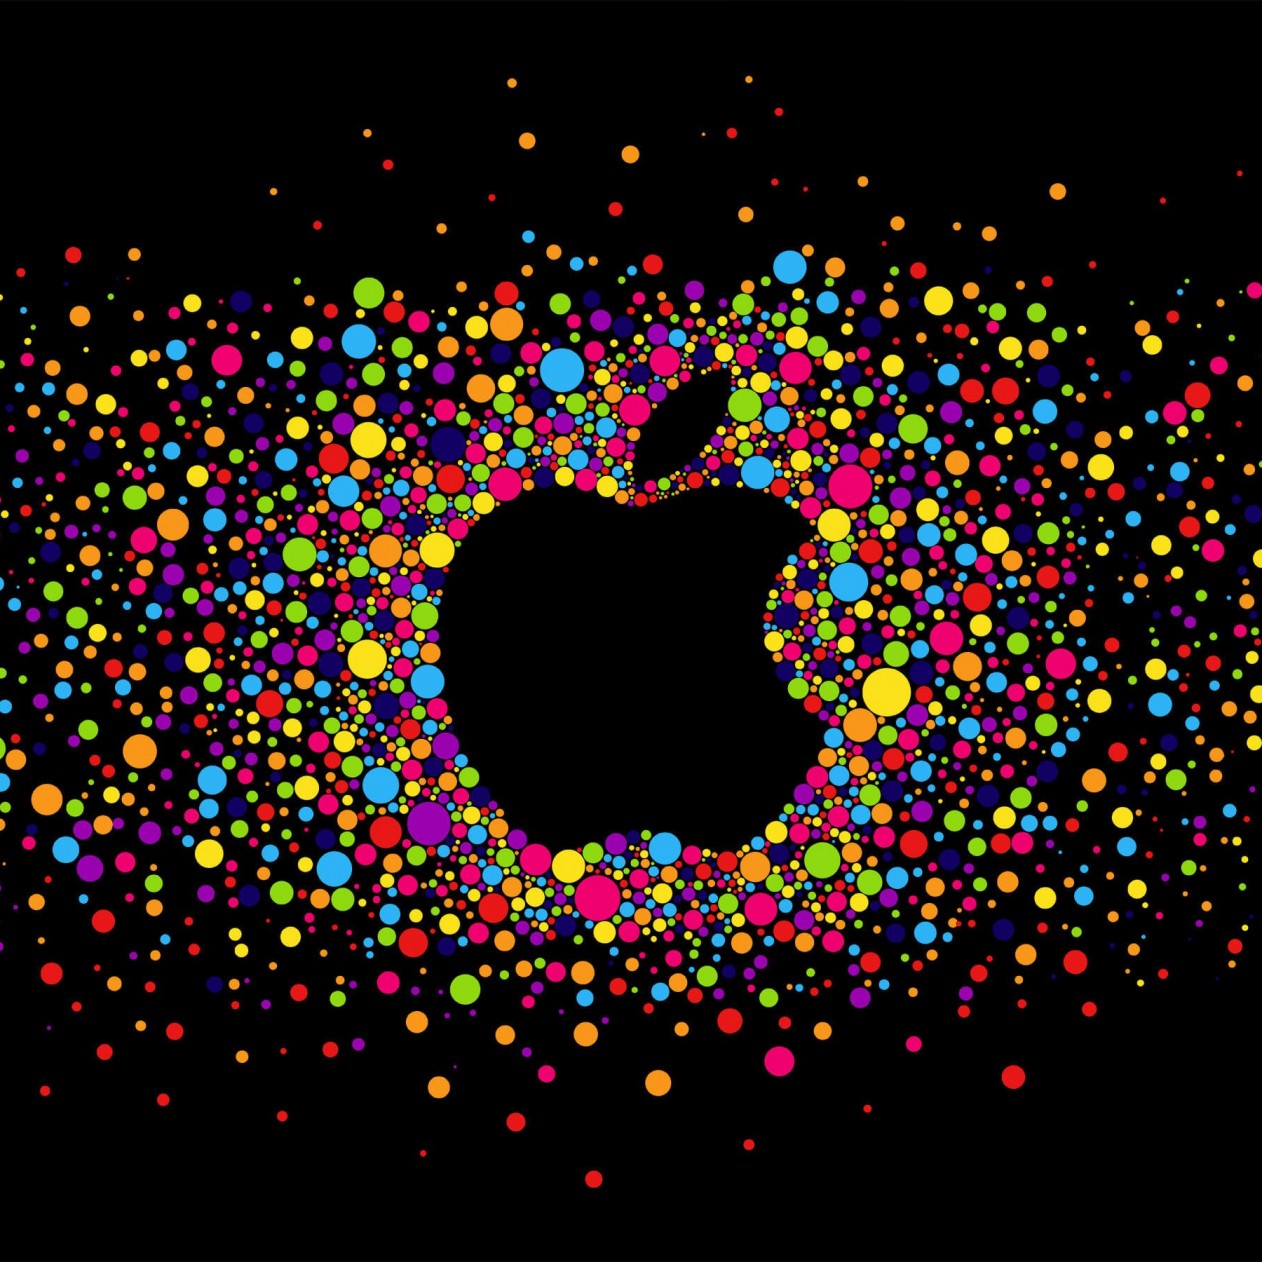 Black Apple Logo Particles Wallpaper for Apple iPad mini